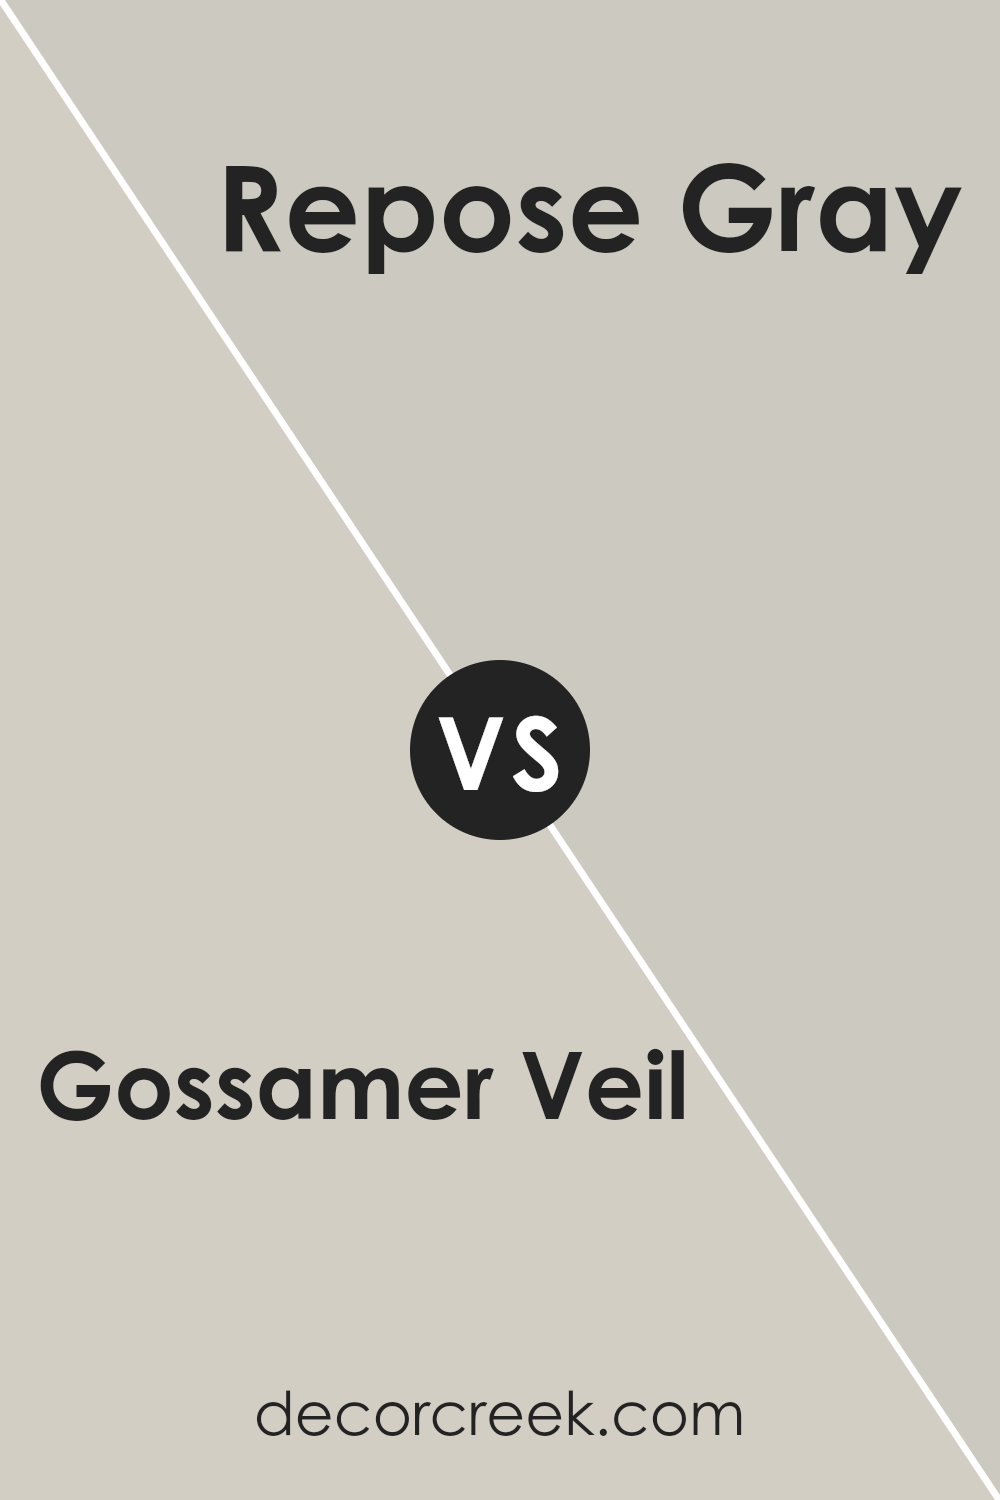 gossamer_veil_sw_9165_vs_repose_gray_sw_7015